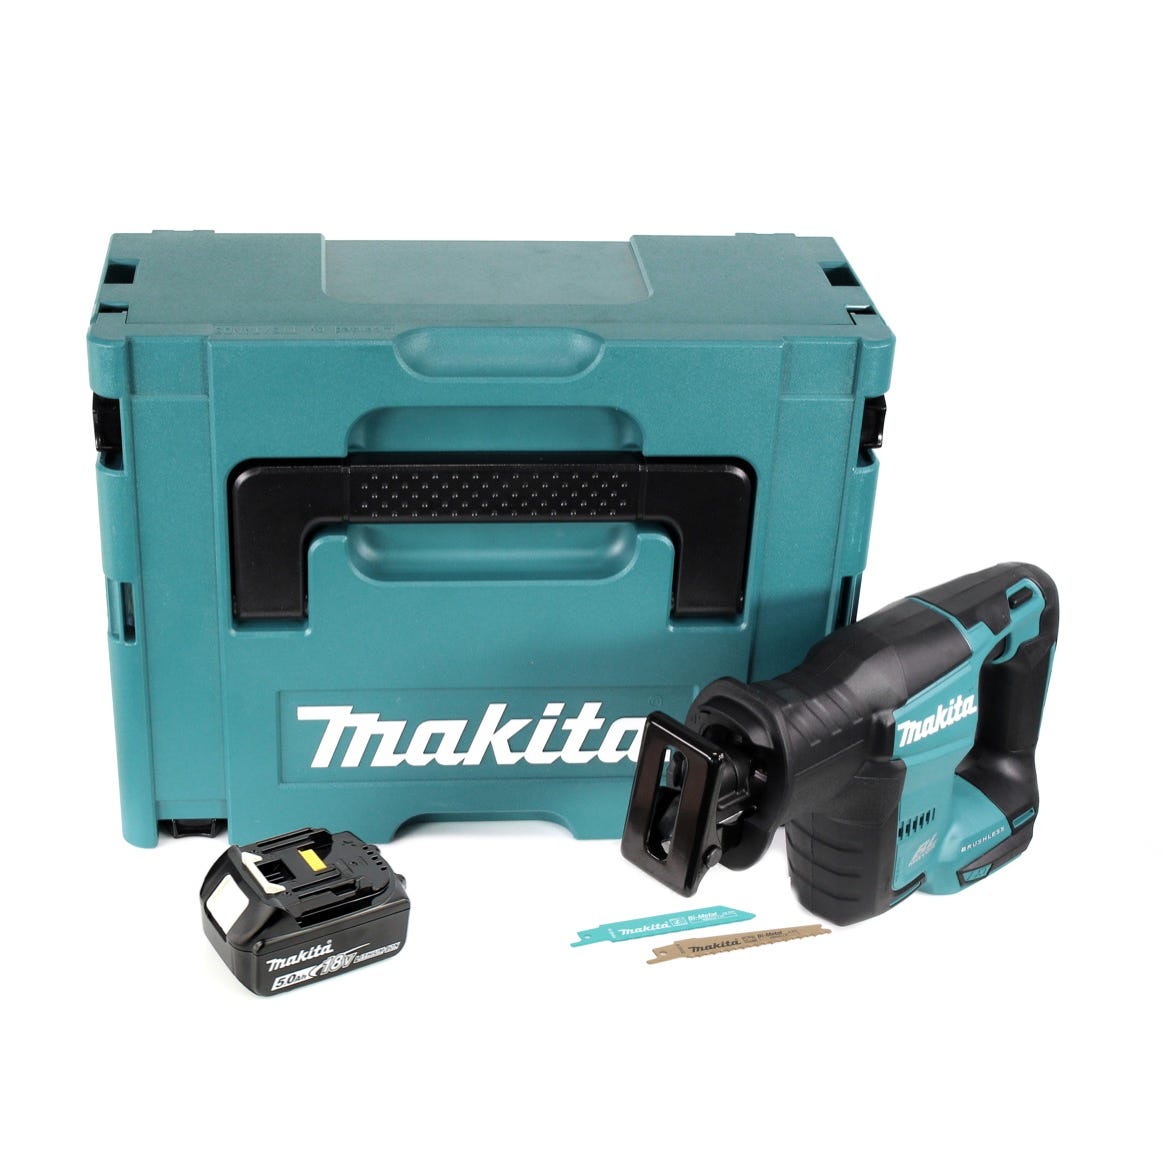 Makita DJR 188 RTJ 18 V Brushless Li-ion Scie récipro sans fil avec Coffret de transport Makpac + 1x Batterie Makita BL 1850 0